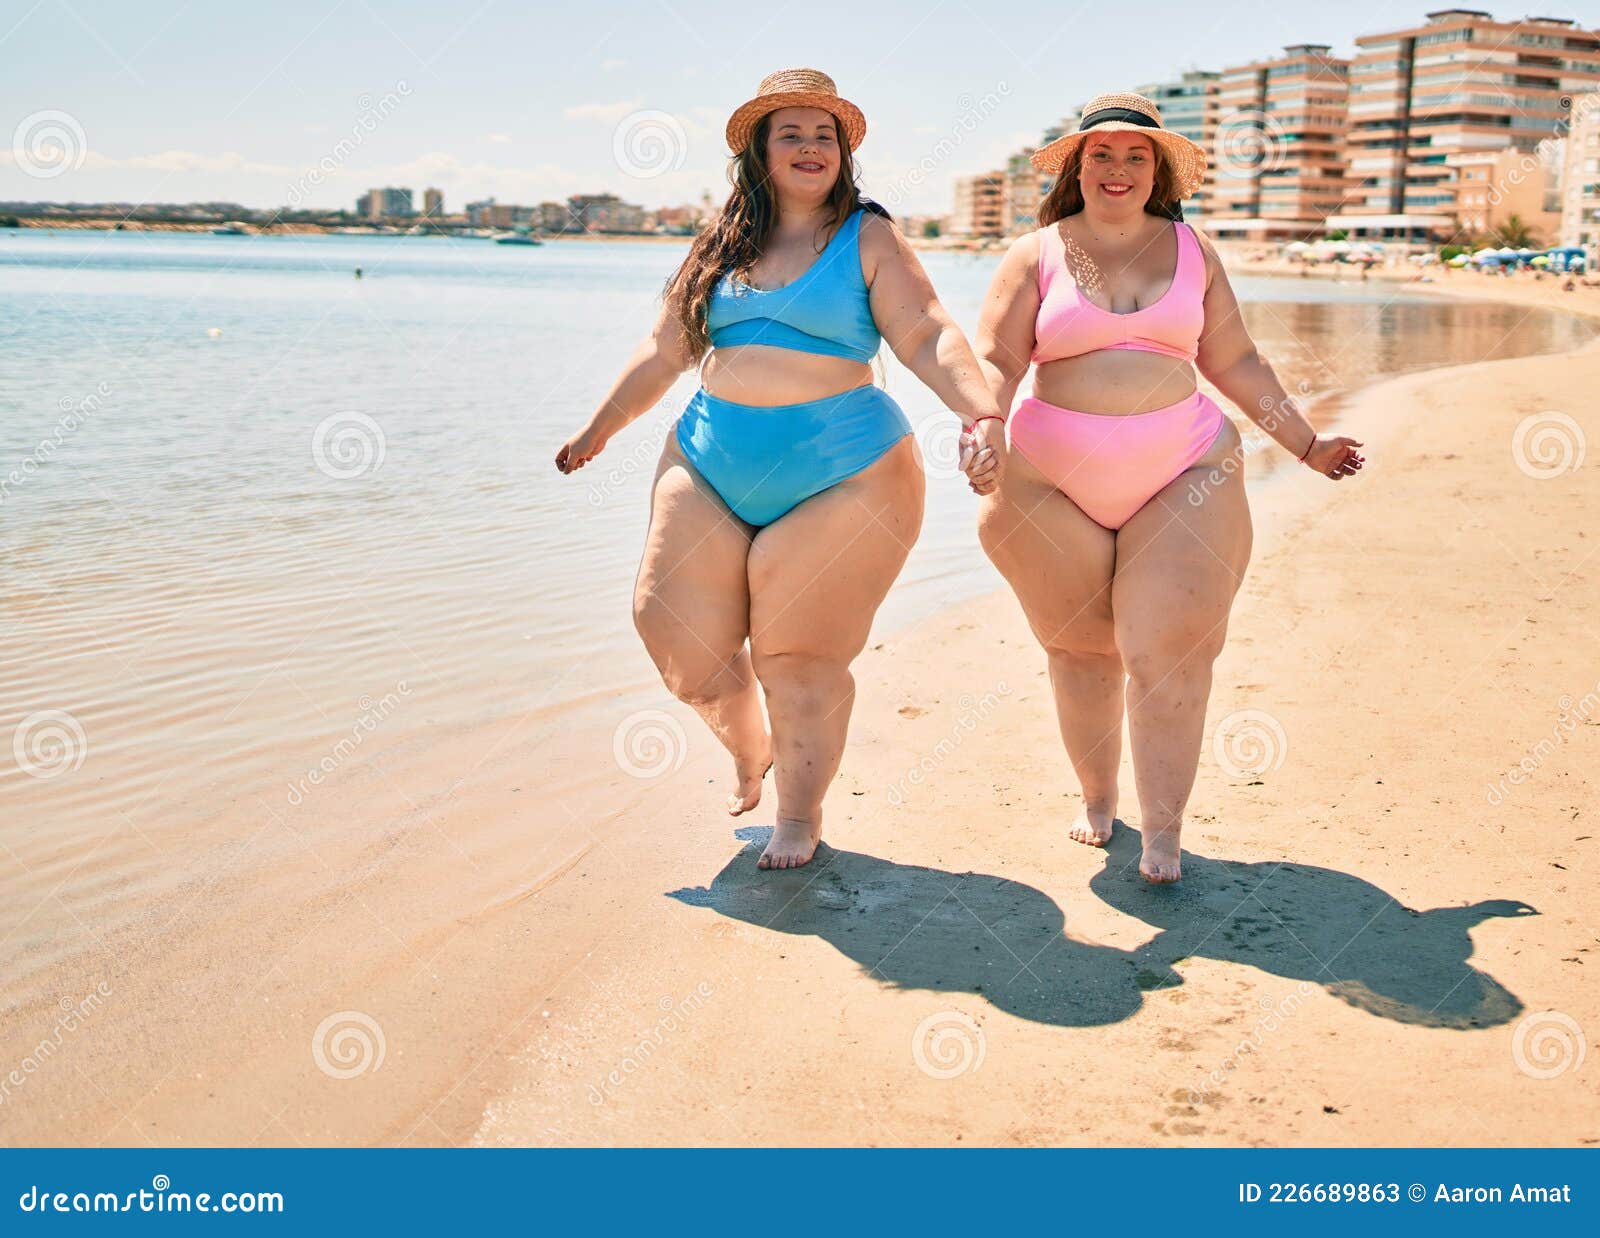 brazil girls nude on the beach